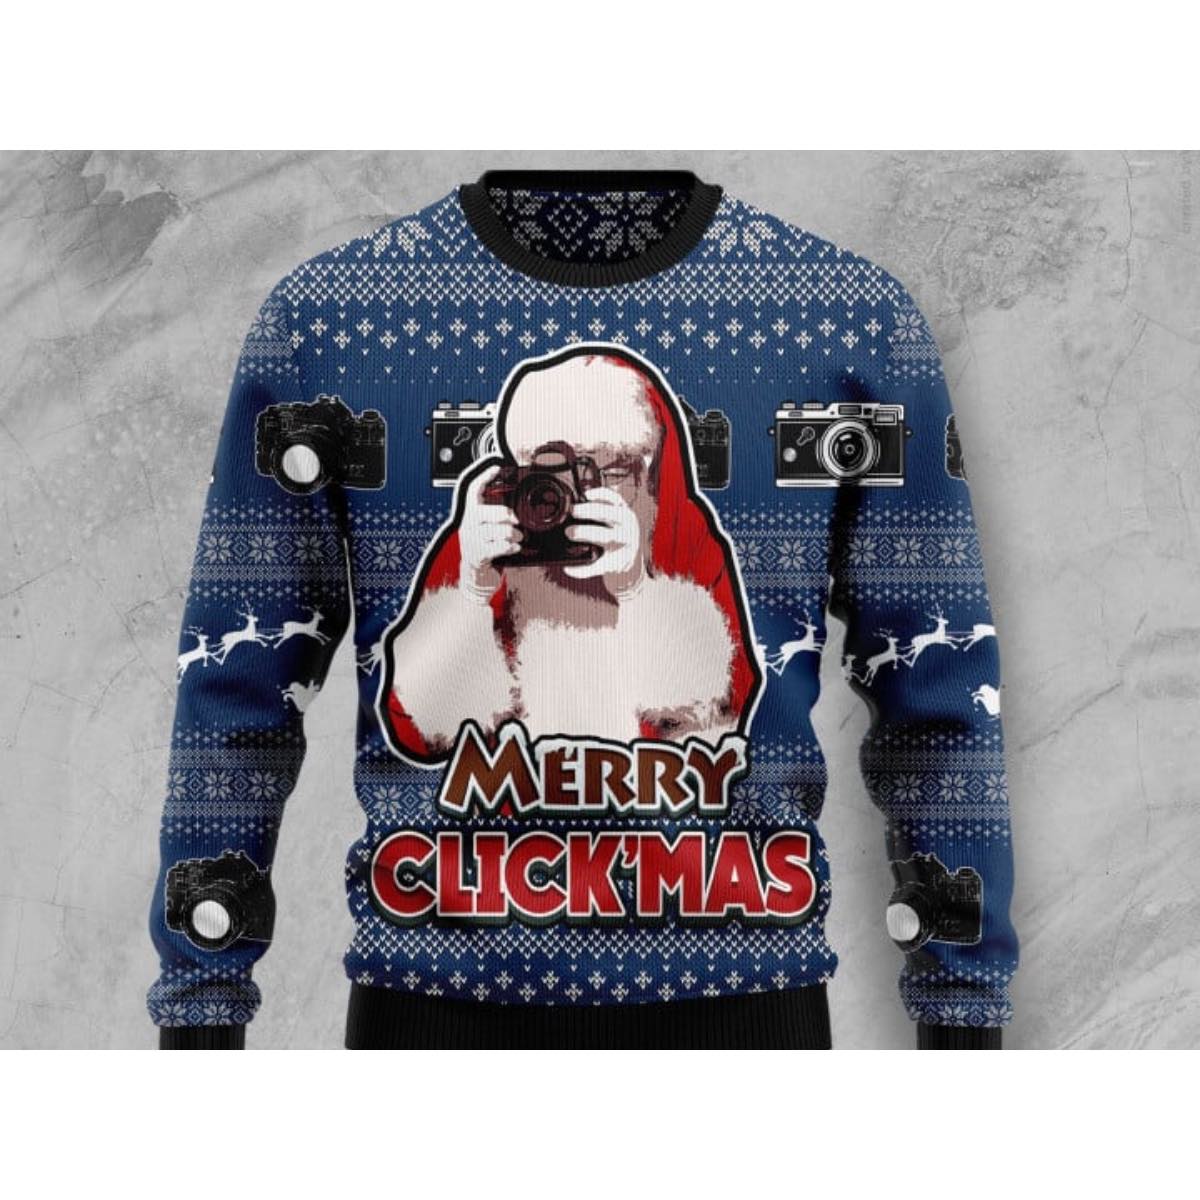 Merry Clickmas Christmas Sweater